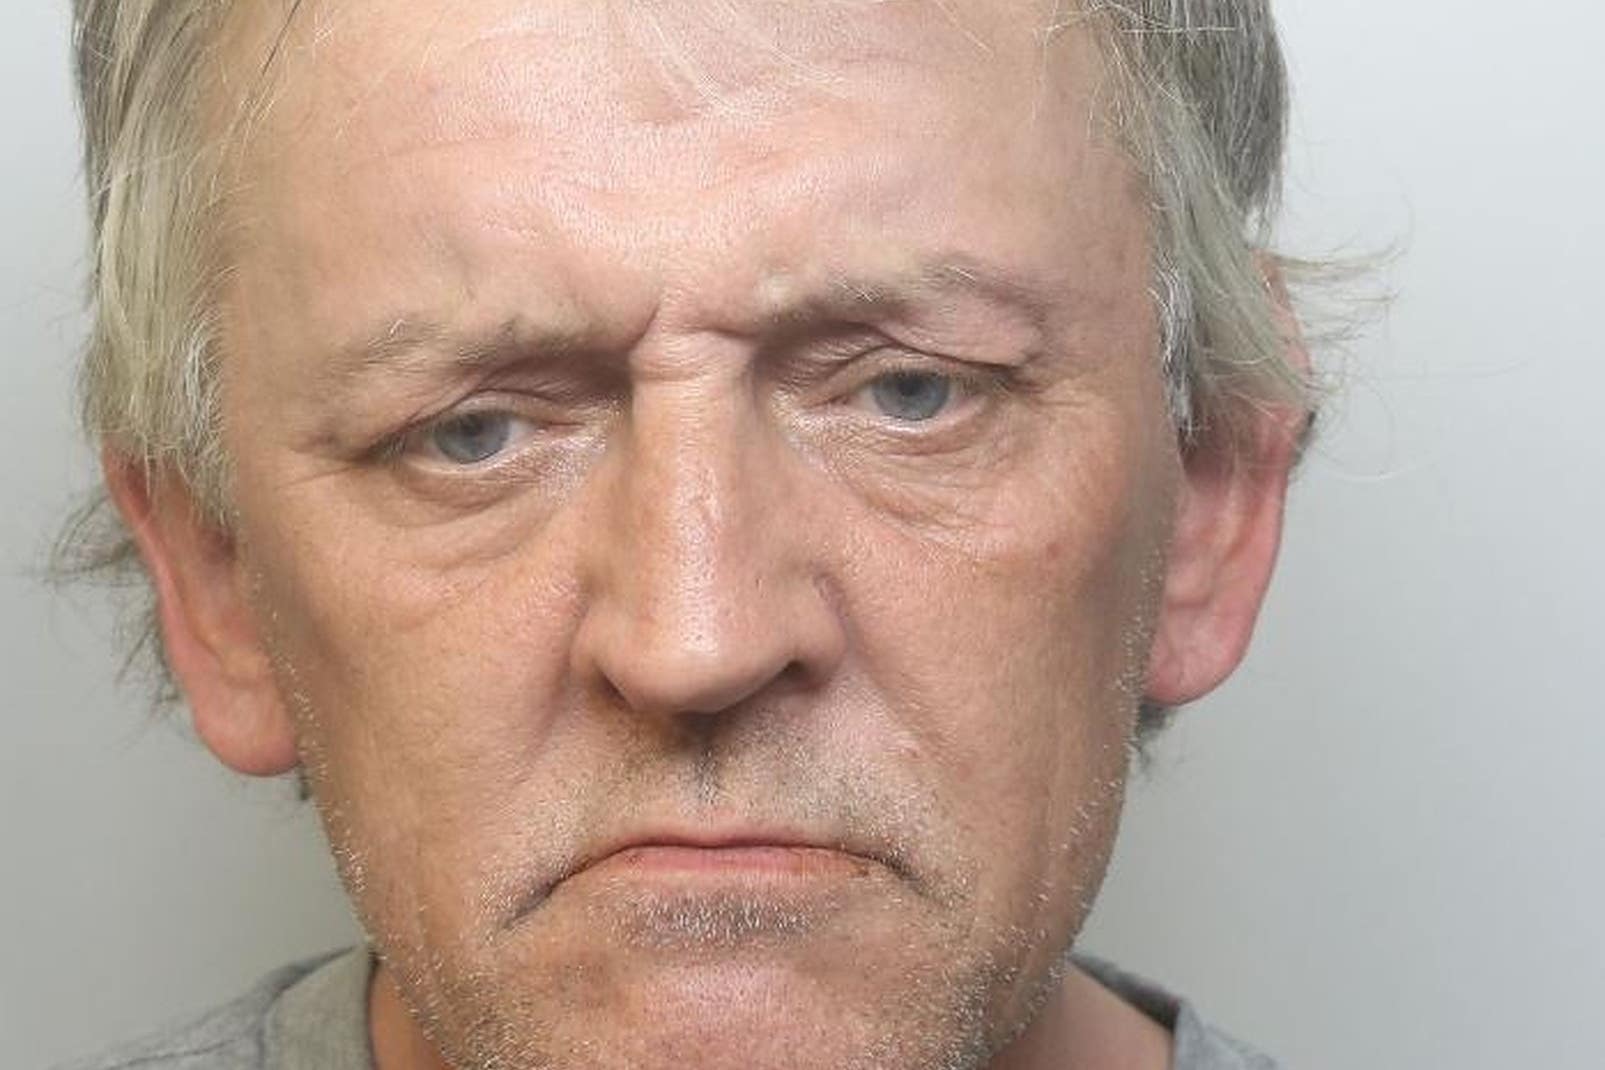 Steven Craig has been convicted of murdering his former partner